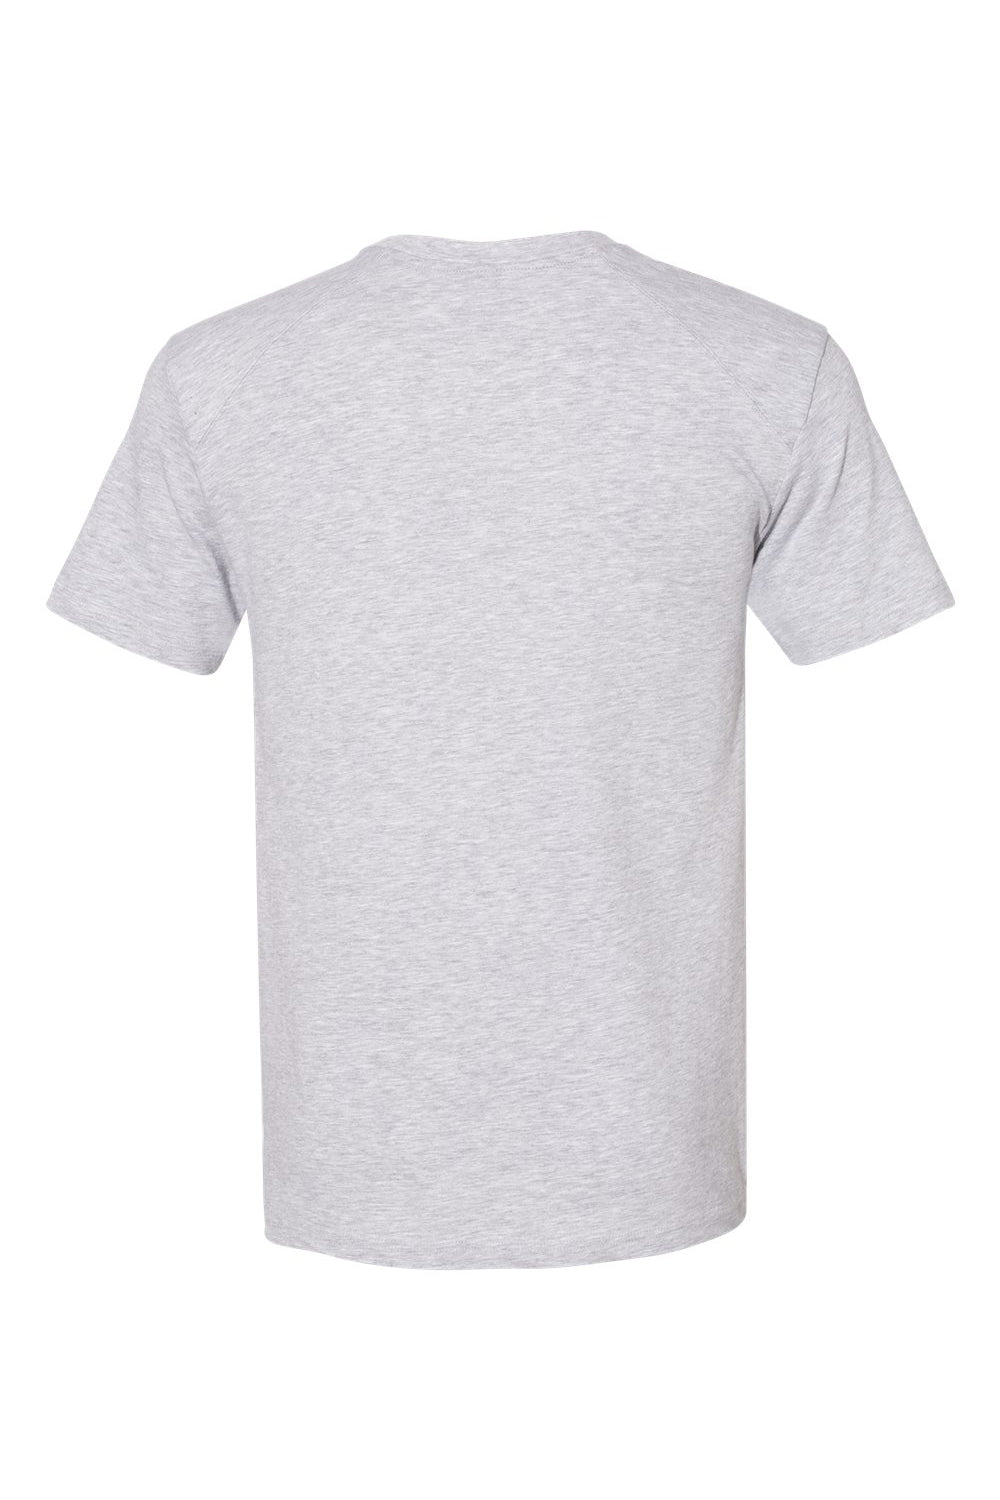 Badger 1000 Mens FitFlex Performance Moisture Wicking Short Sleeve Crewneck T-Shirt Oxford Grey Flat Back